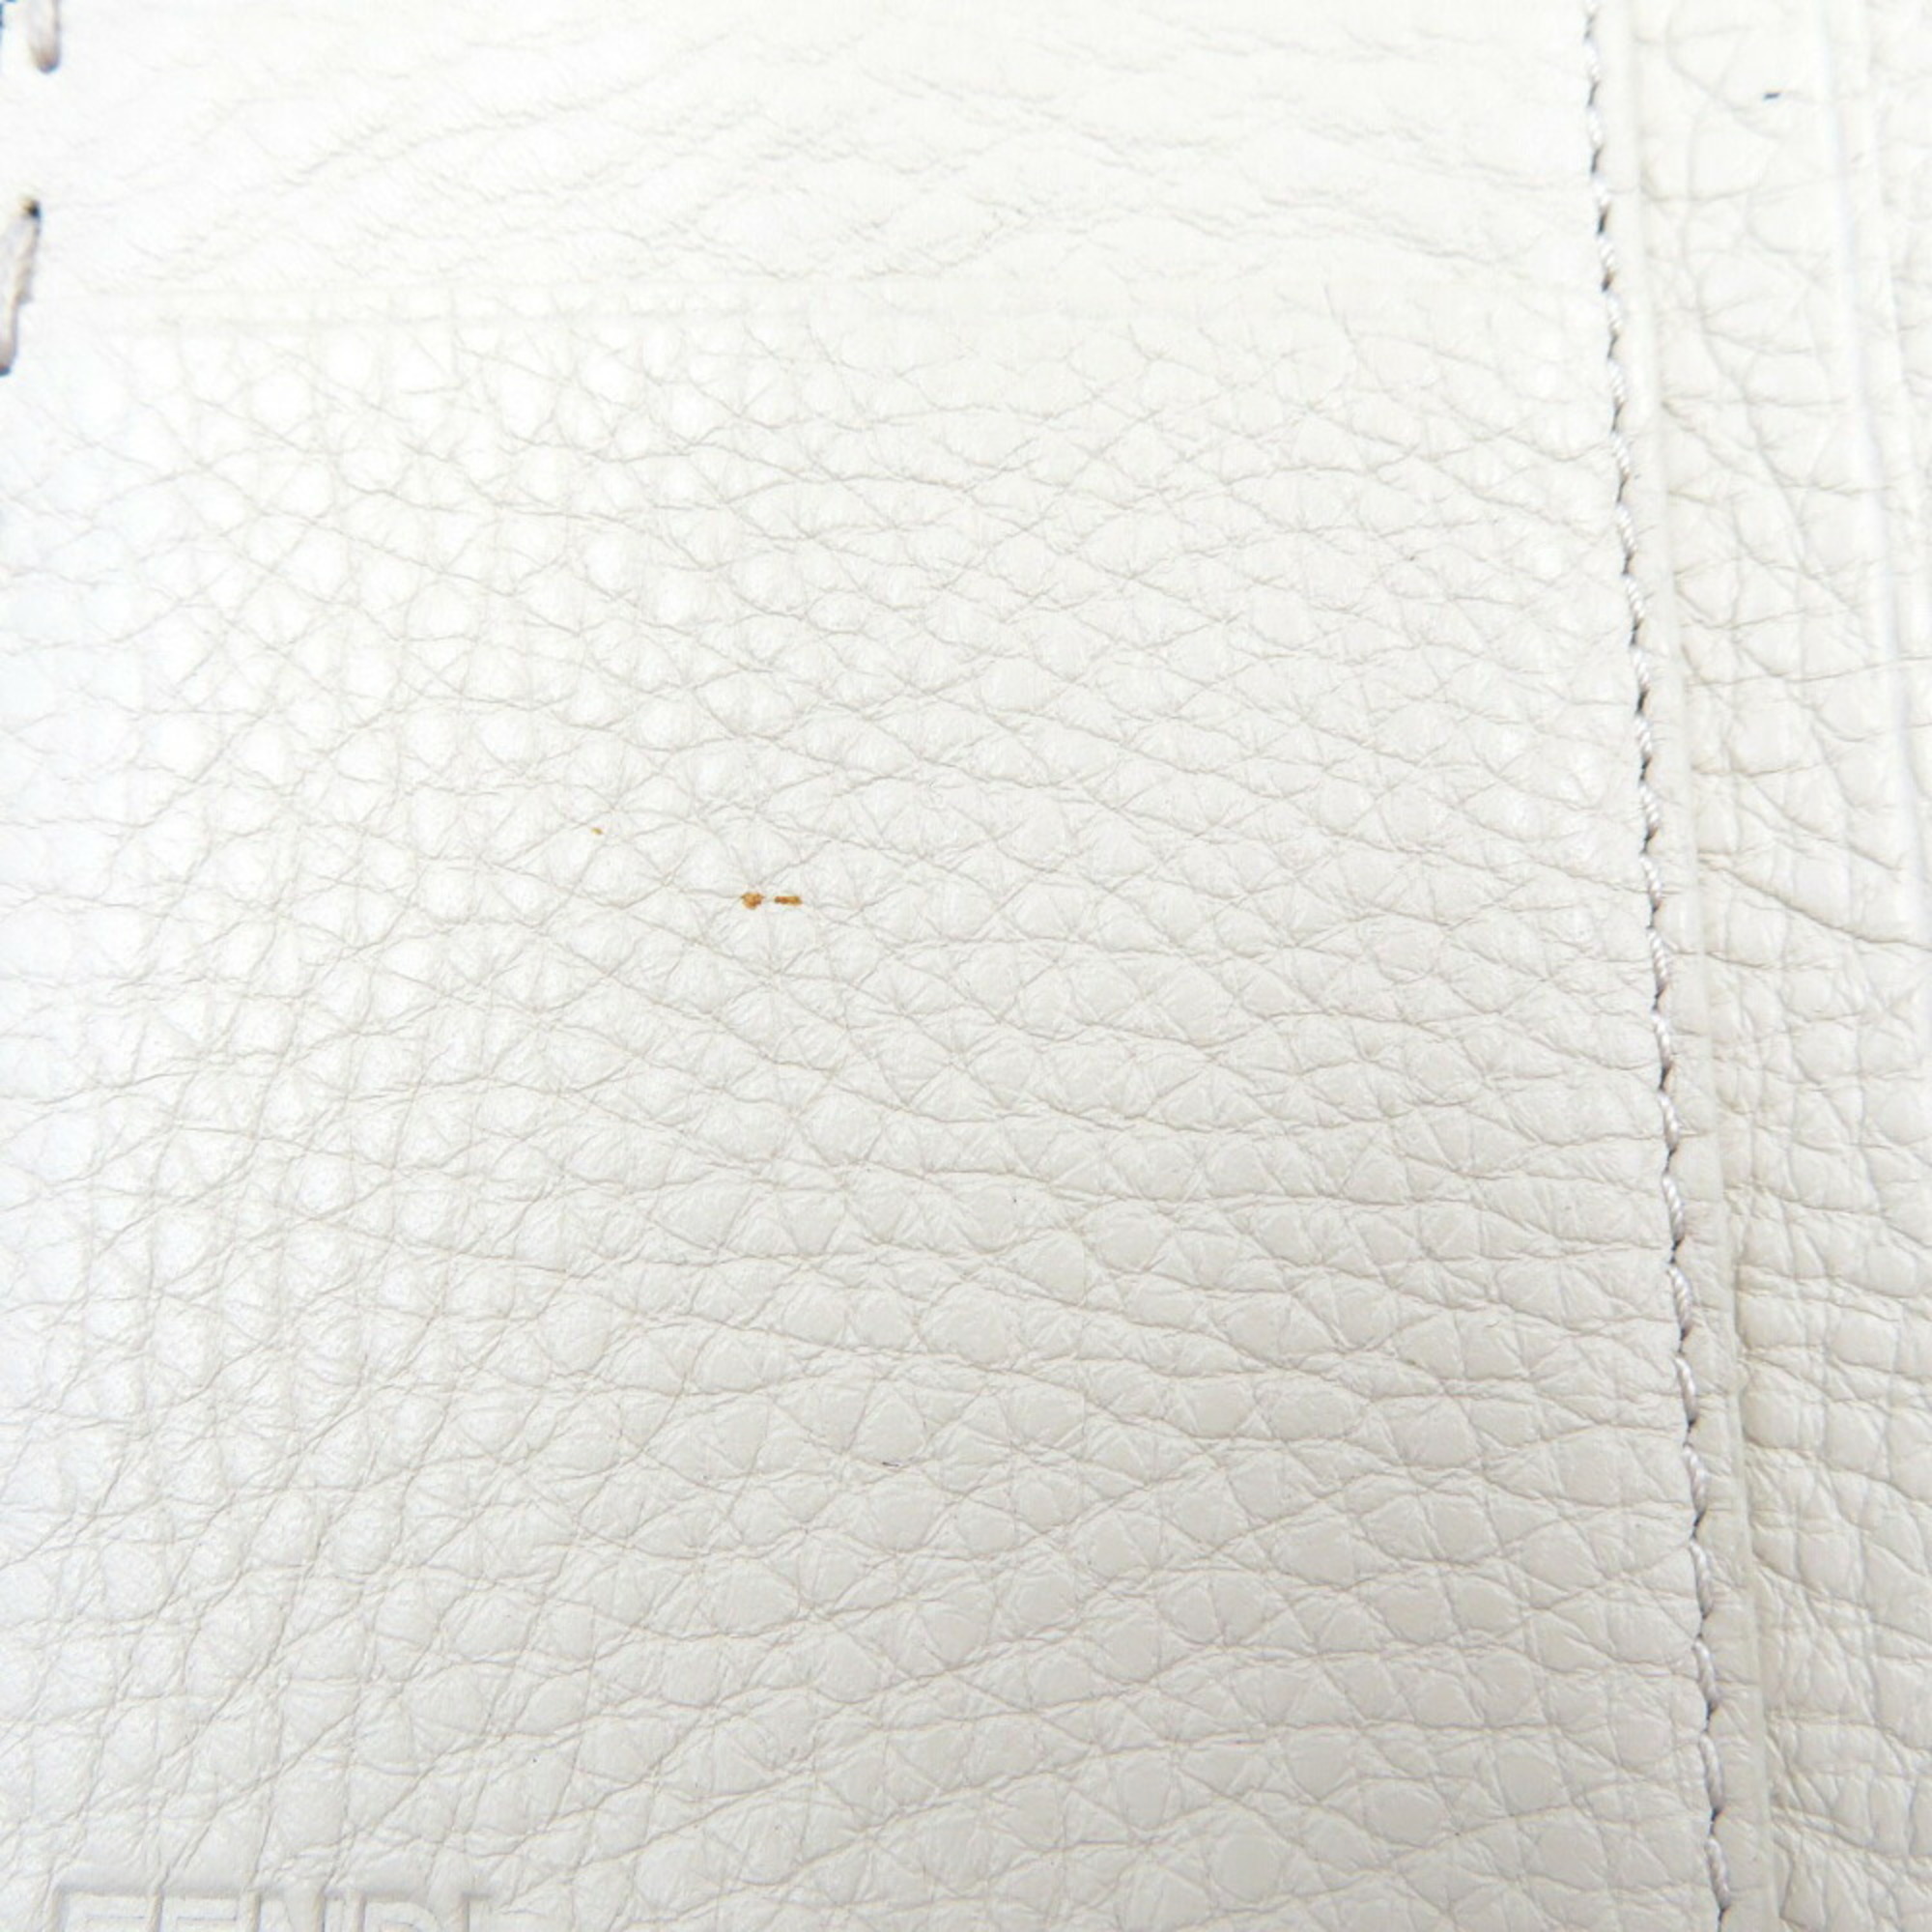 Fendi Selleria Peekaboo 8M0308 Leather Ivory White Trifold Long Wallet 0179FENDI 5K0179ZZL5